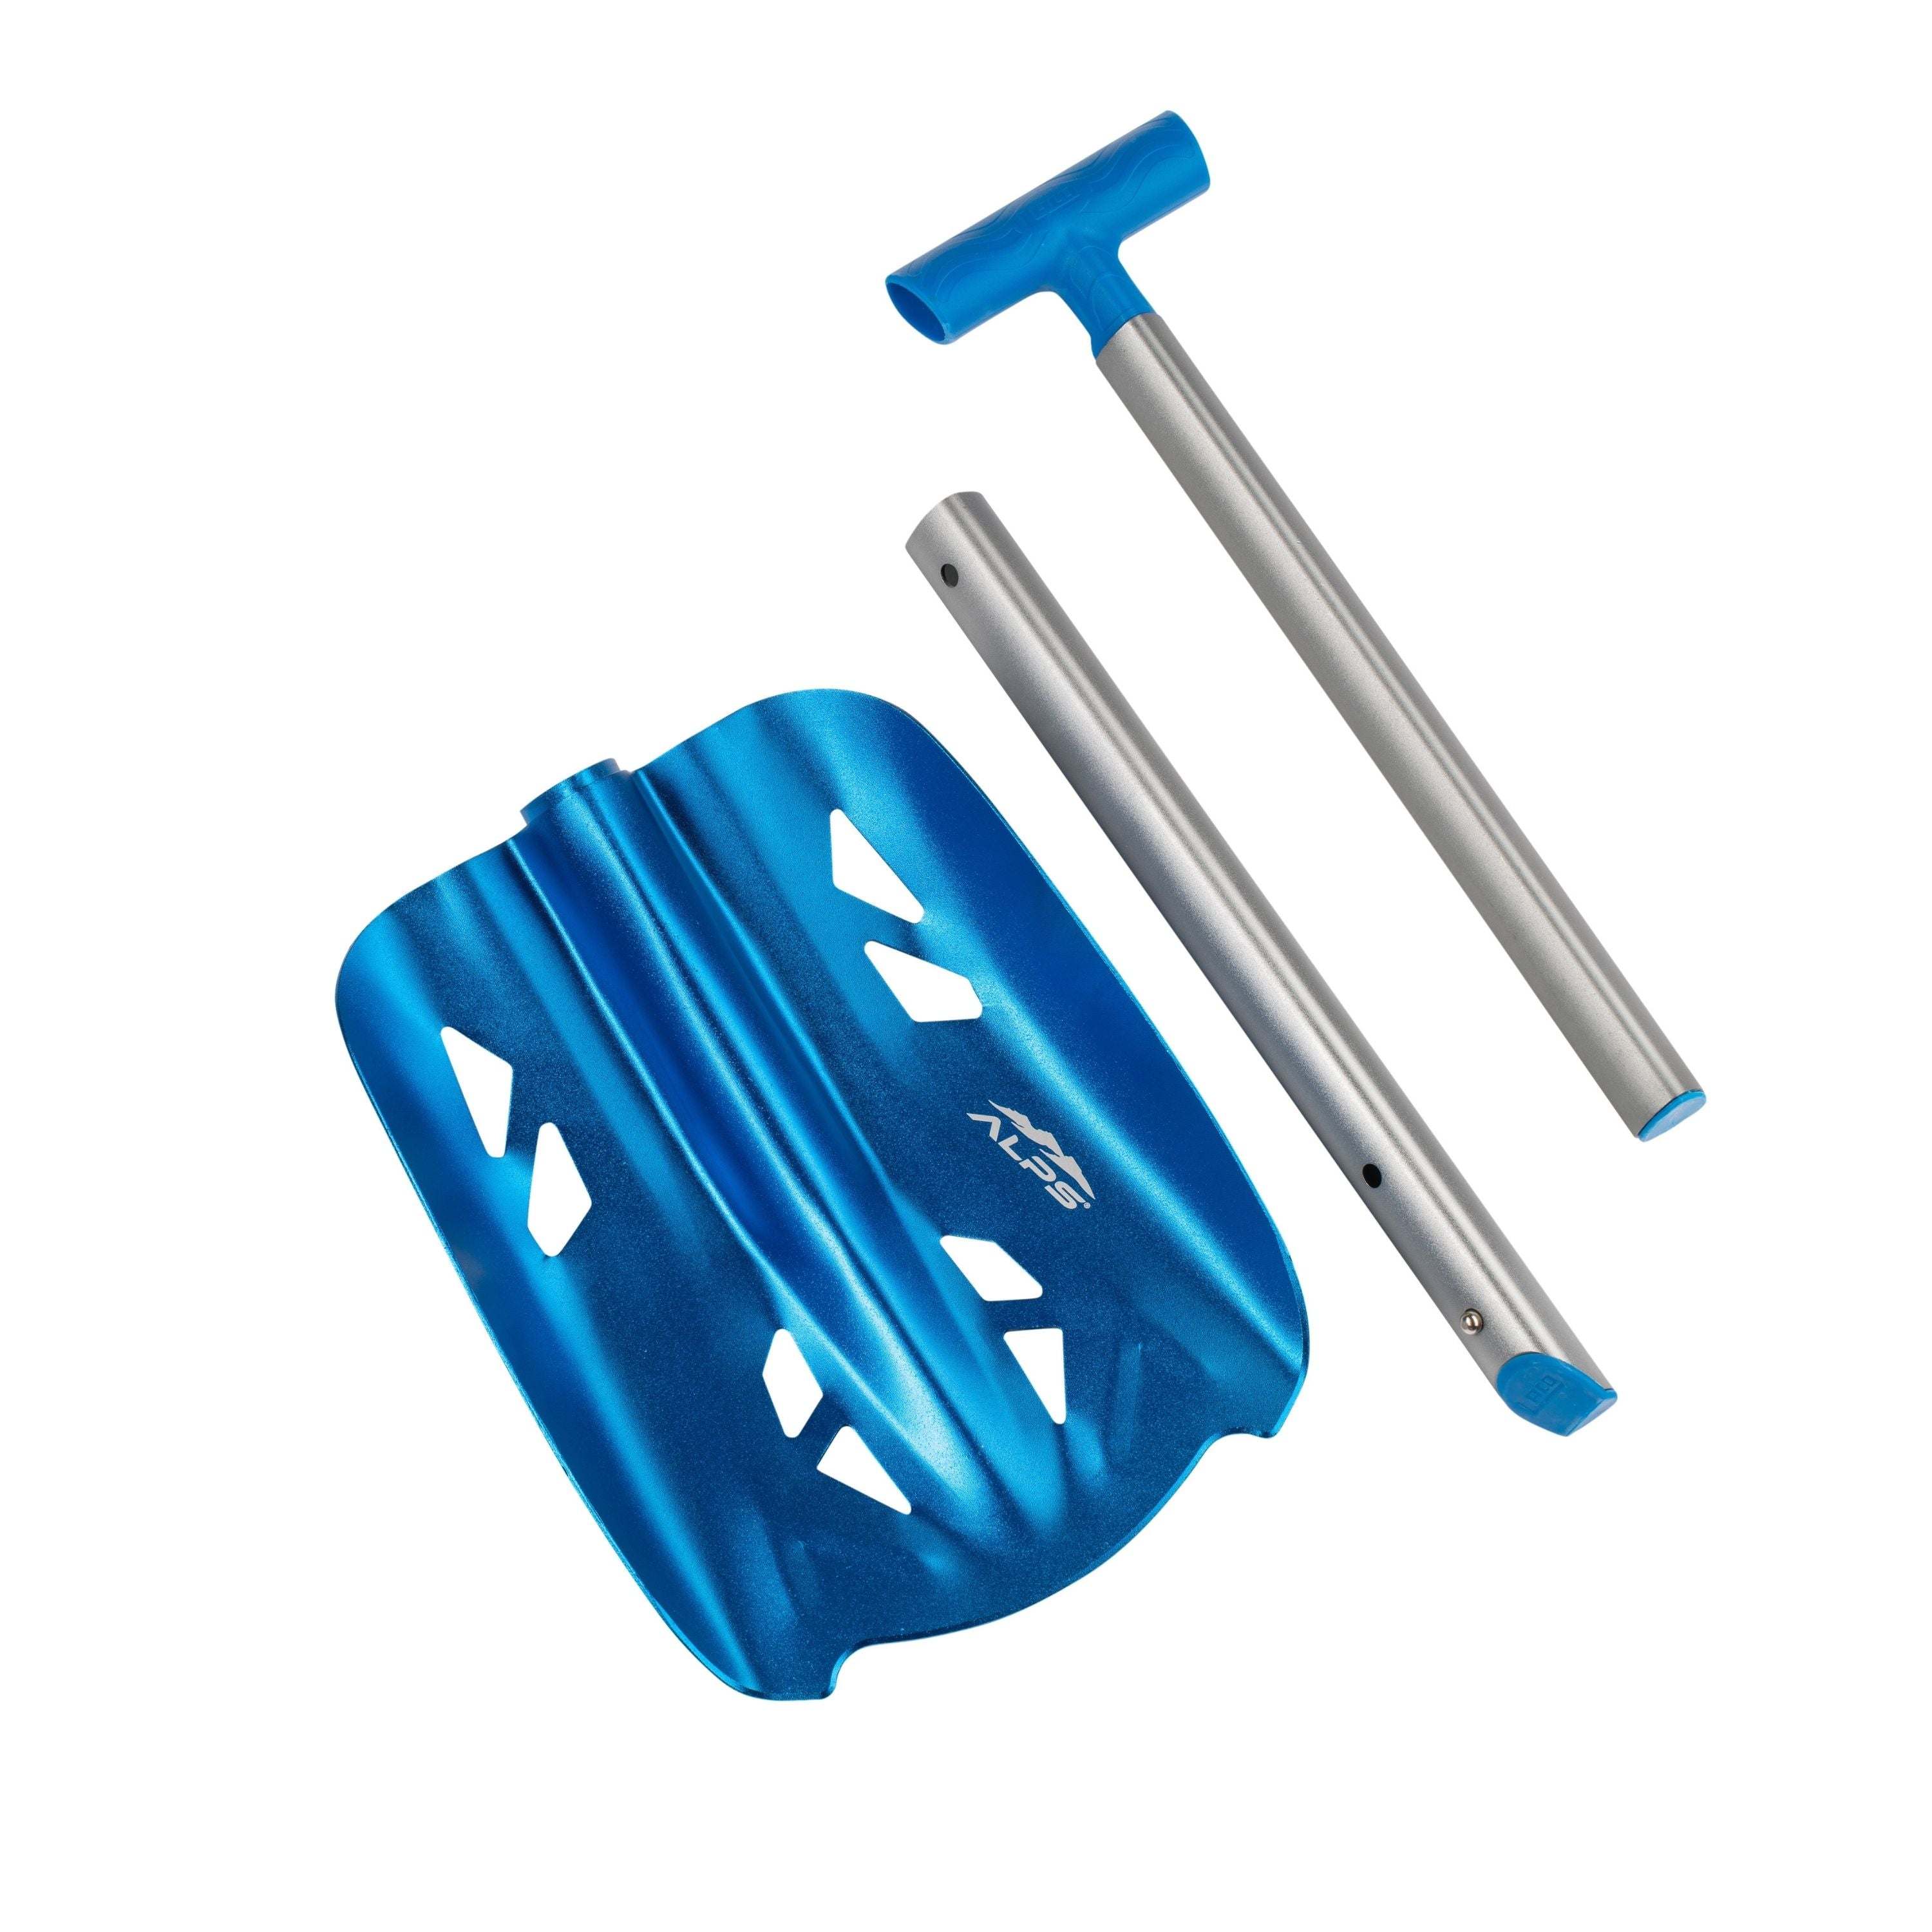 Pelle compacte utilitaire||Utilitary compact shovel